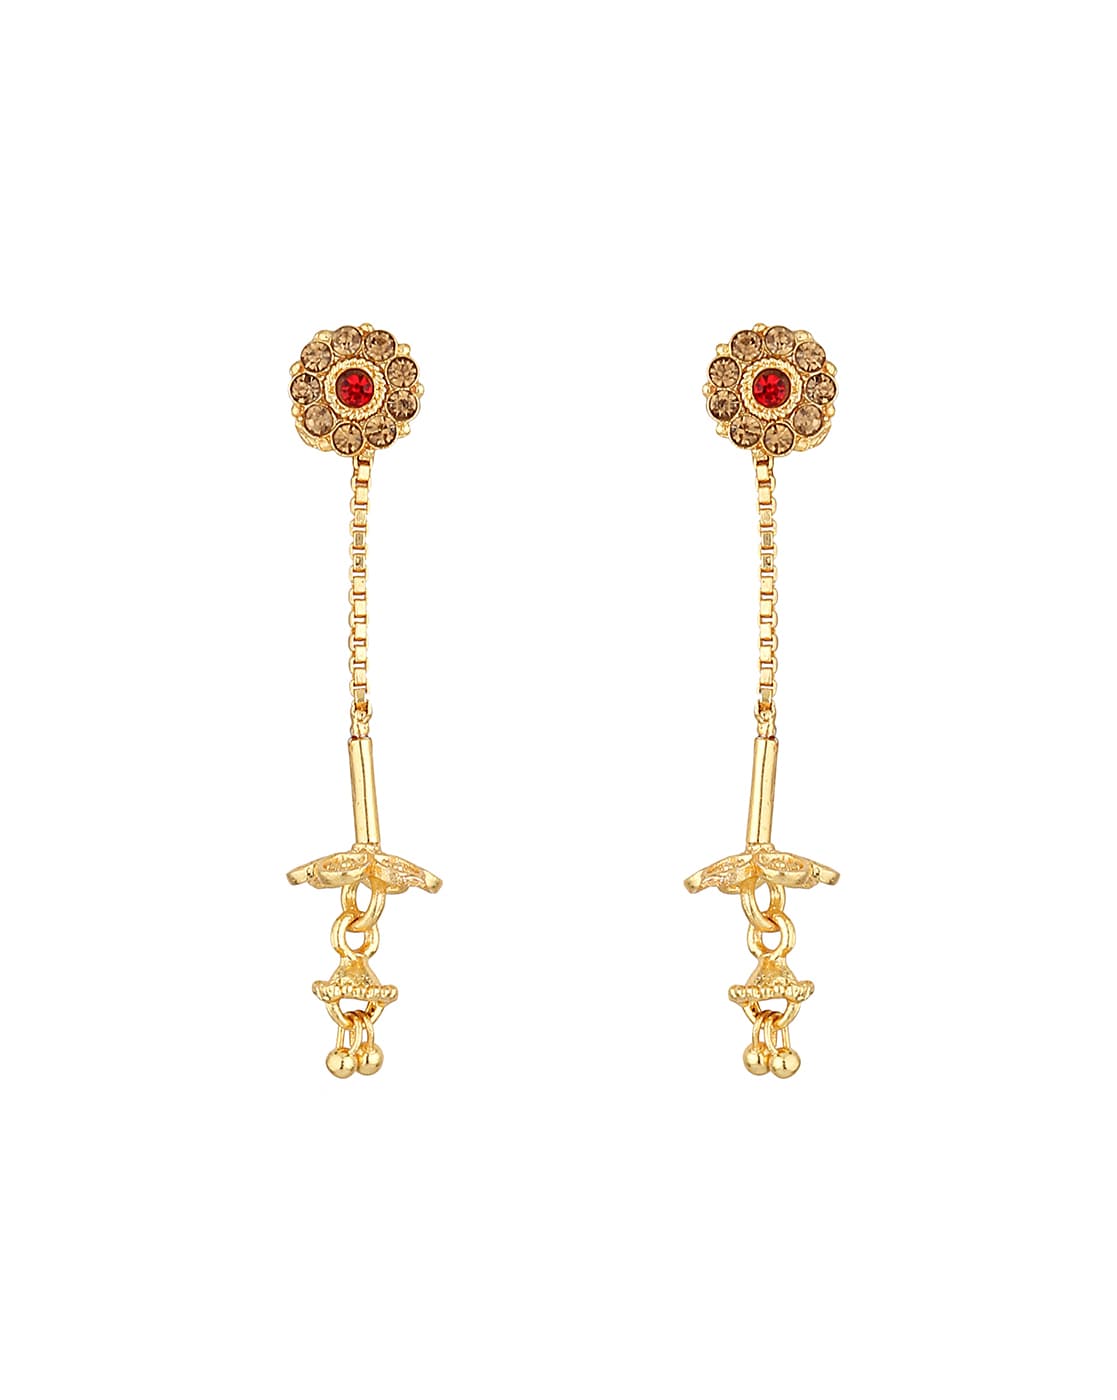 New* Beautiful Gold Sui Dhaga Earring Designs l सोने के सुई धागा के  डिज़ाइन। Long gold earring l - YouTube